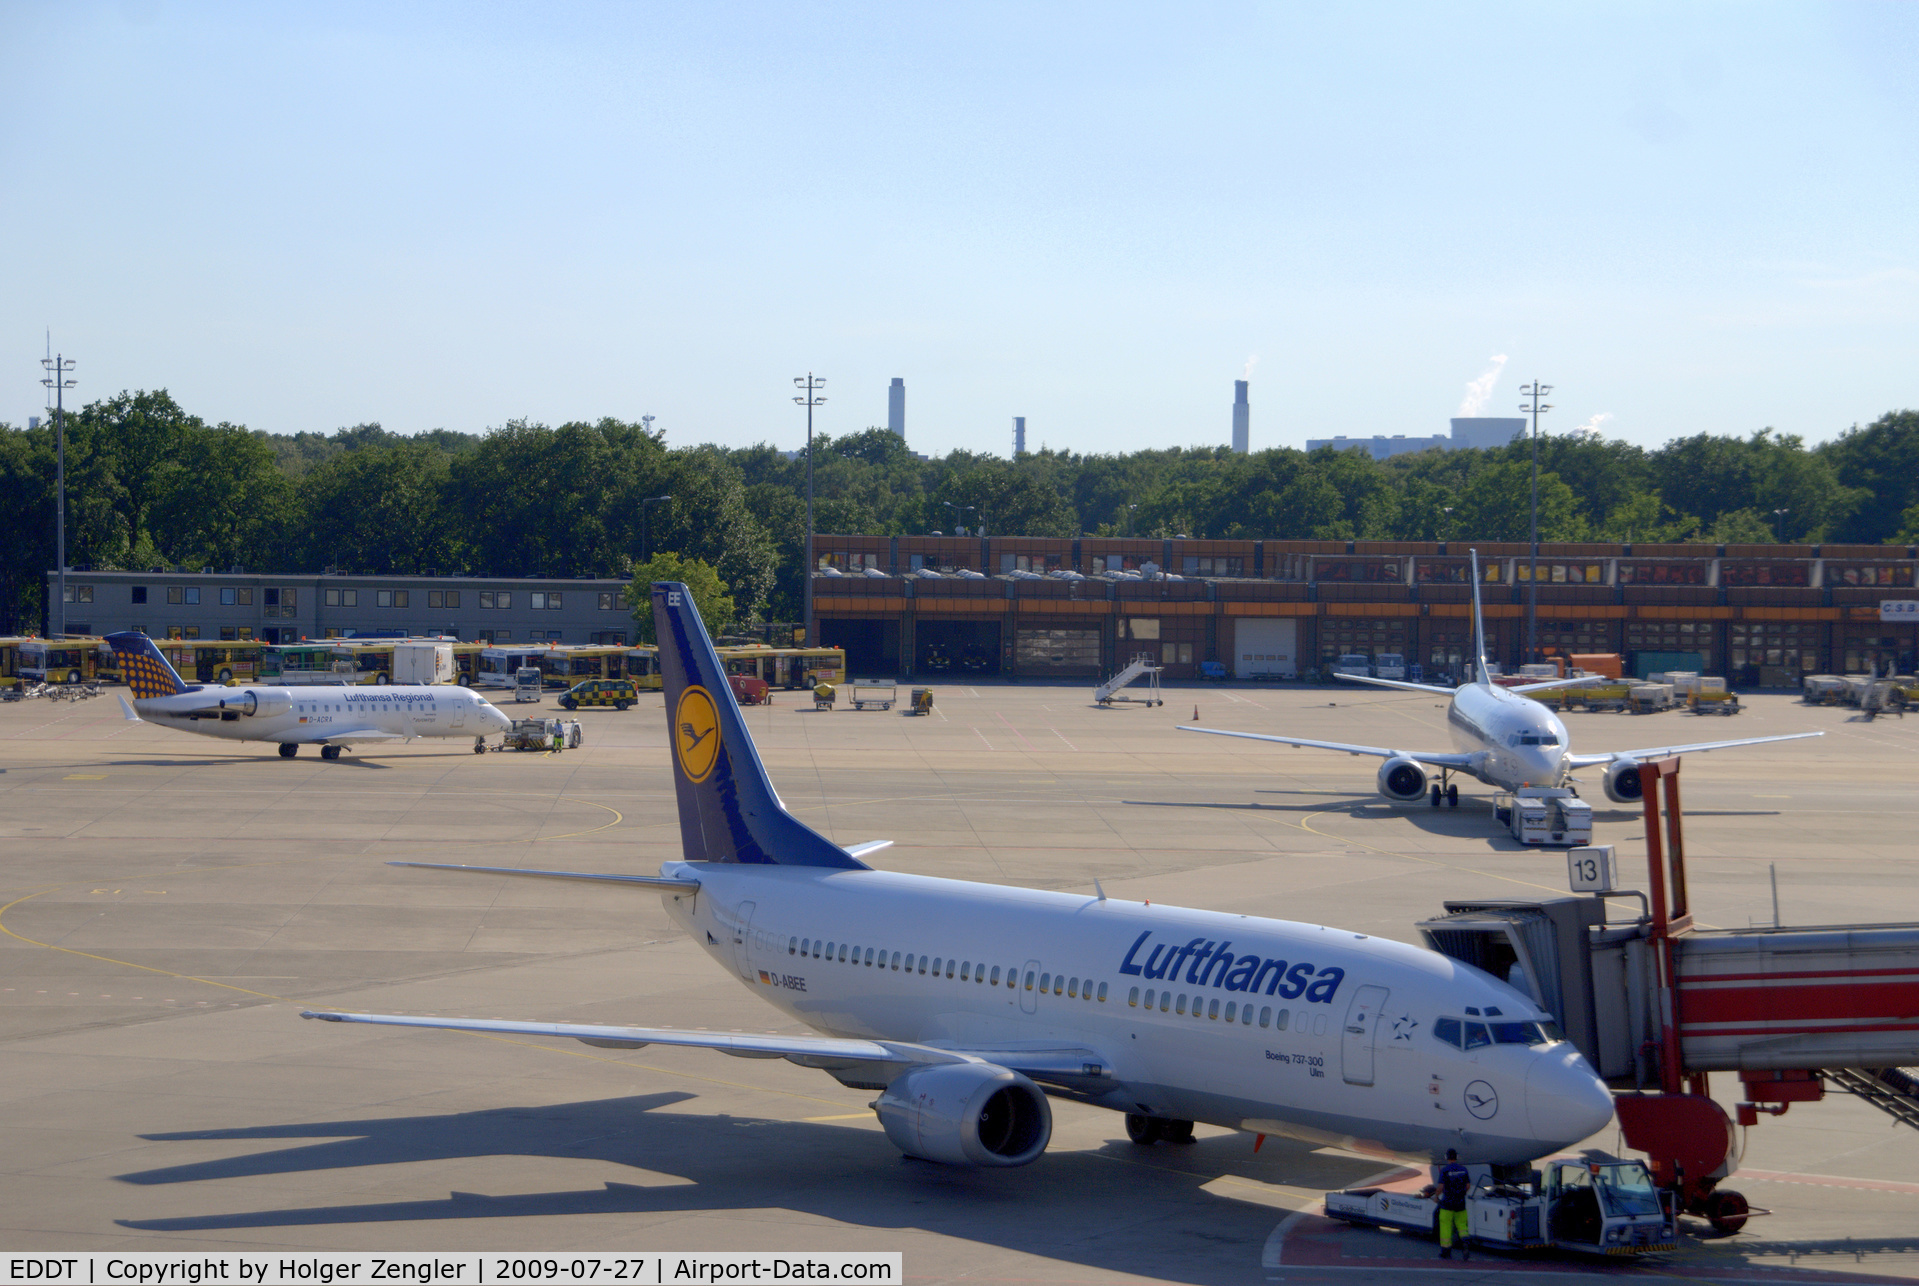 Tegel International Airport (closing in 2011), Berlin Germany (EDDT) - A bunch of Lufthansa jets around gate no. 13